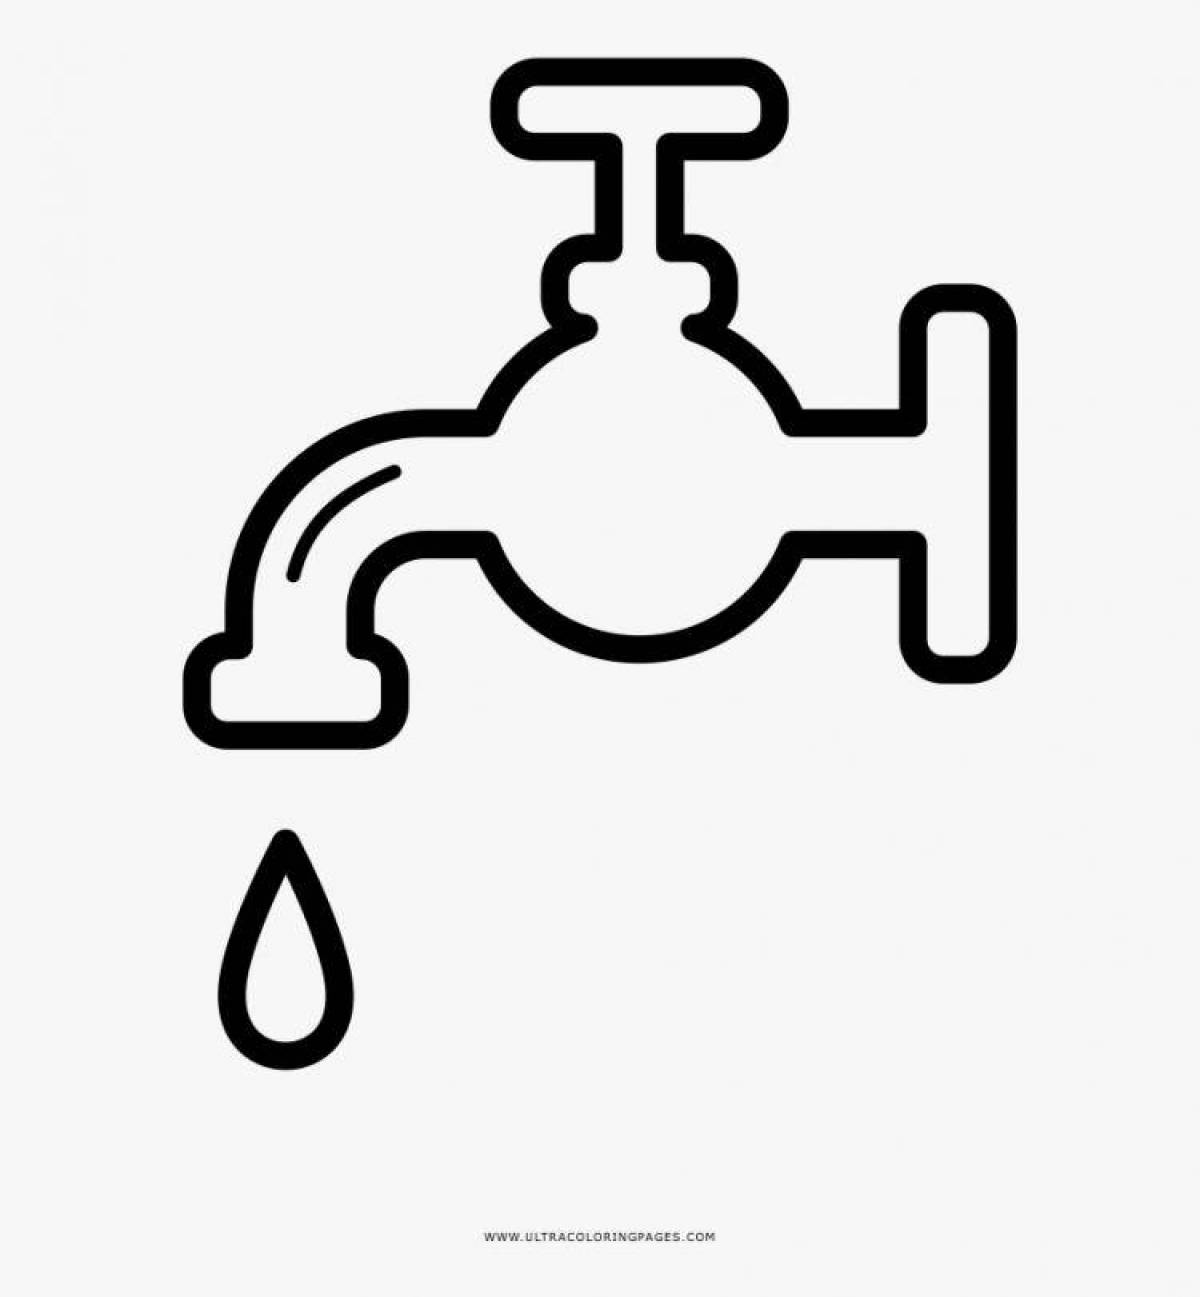 Water faucet #12